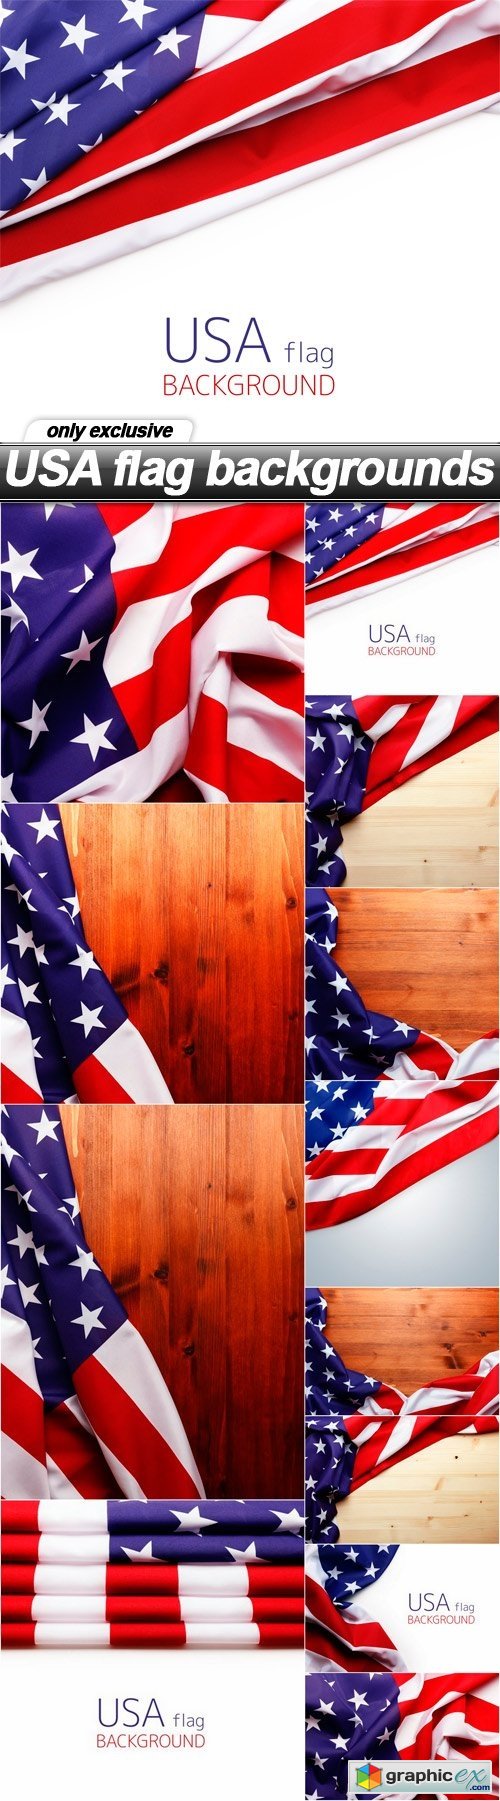 USA flag backgrounds - 12 UHQ JPEG